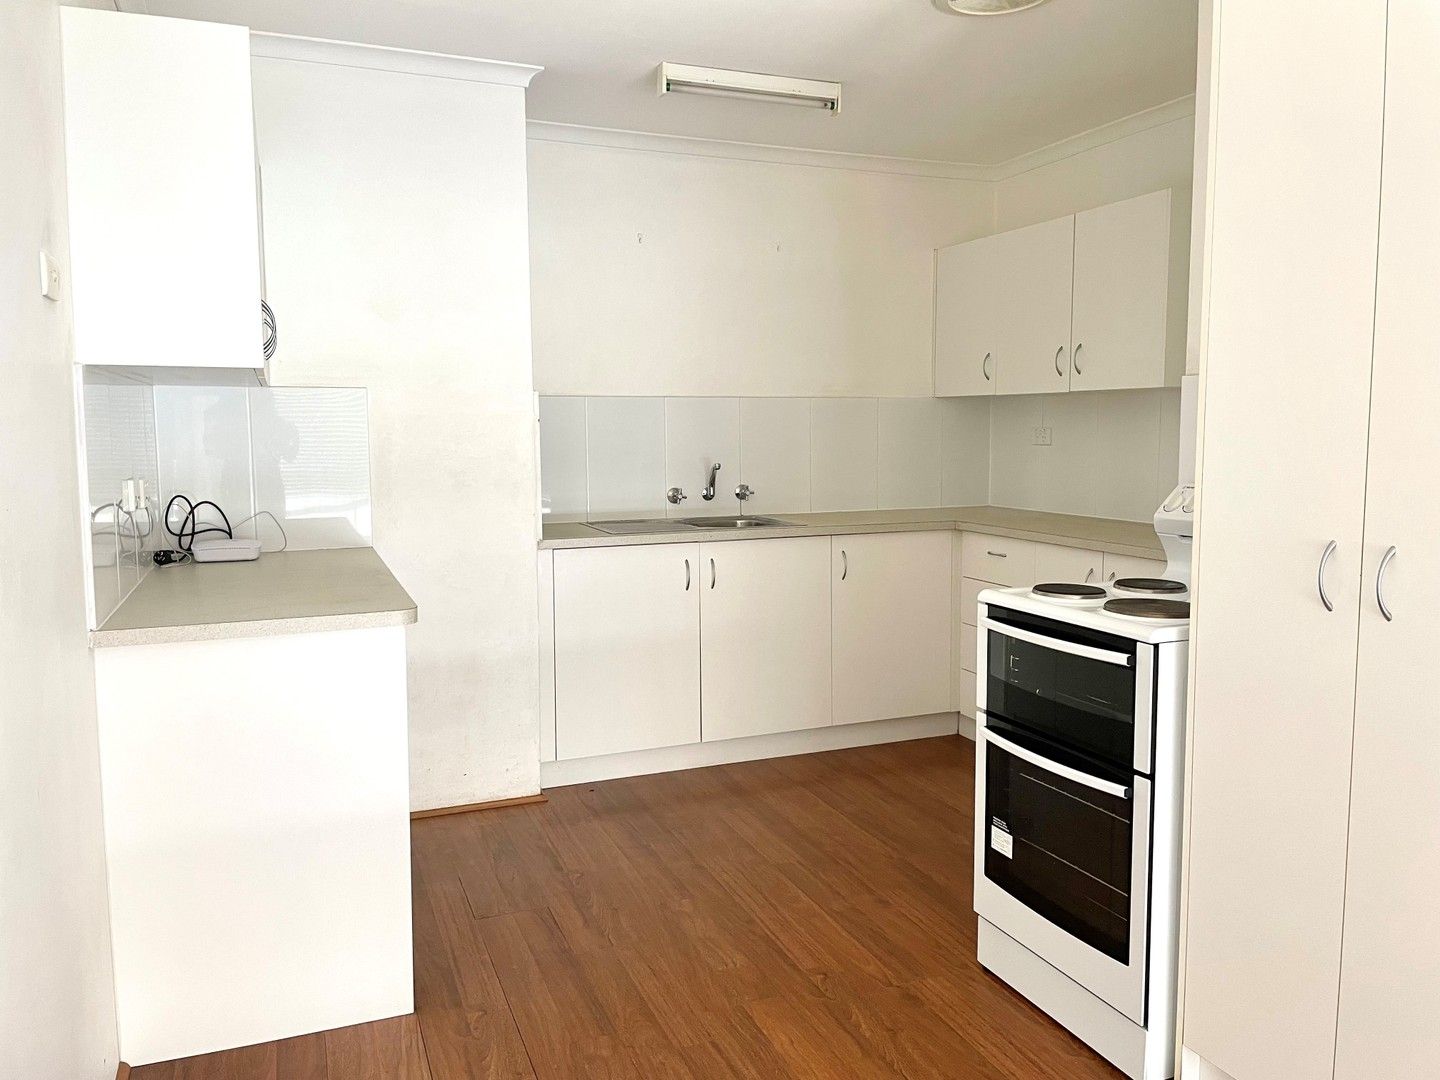 2 bedrooms Apartment / Unit / Flat in 7/19 River Terrace SURFERS PARADISE QLD, 4217